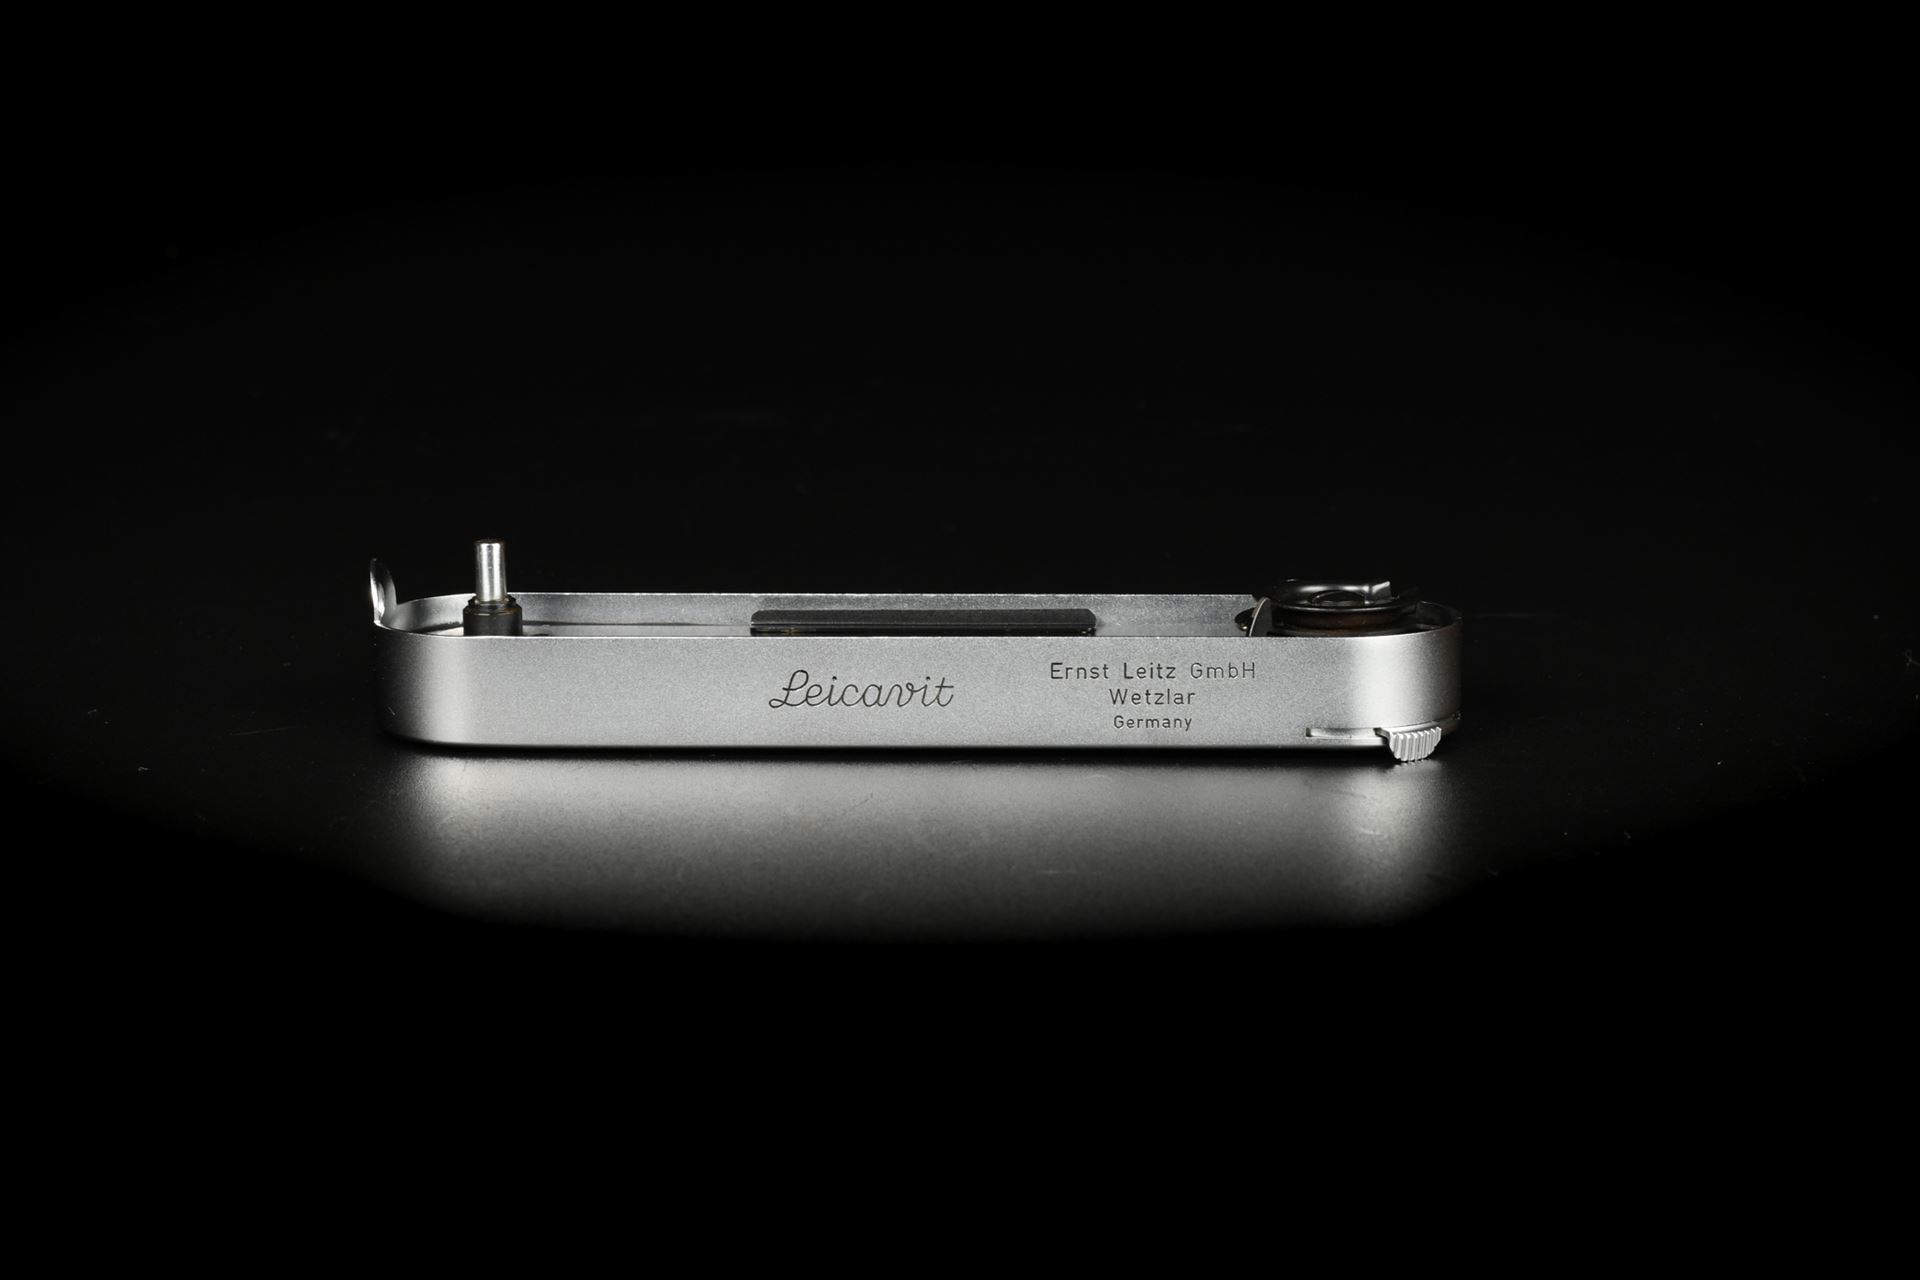 Picture of Leica SYOOM Leicavit Rapid Winder for IIIf or IIIg